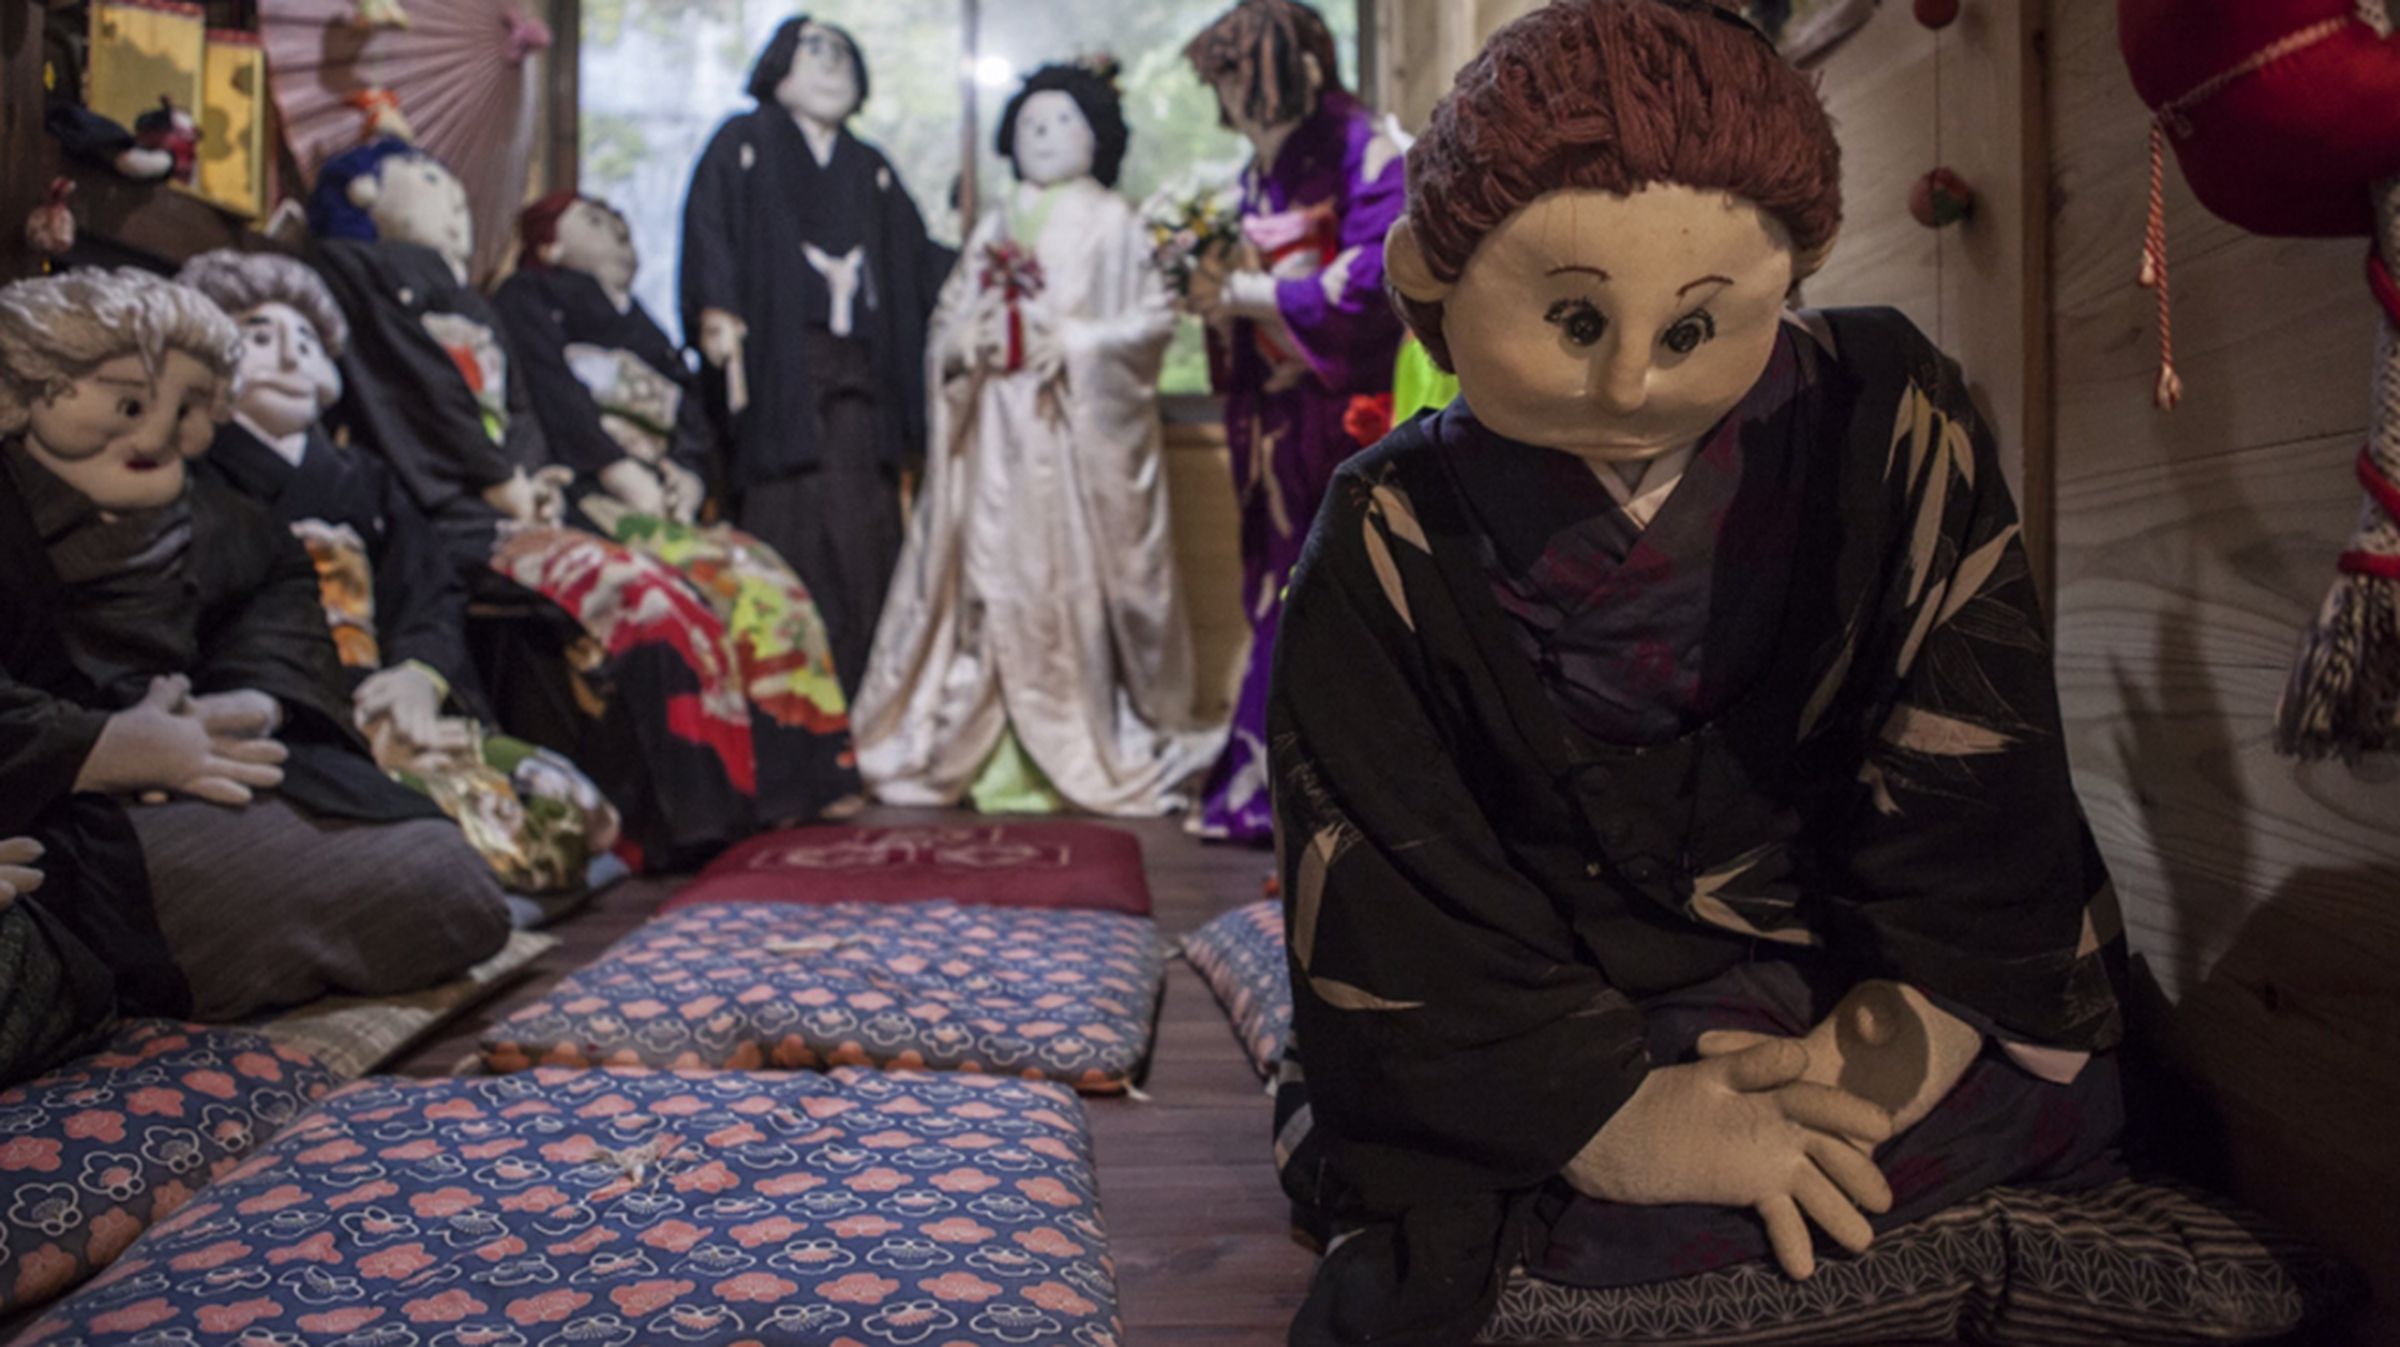 The dolls of Nagoro village